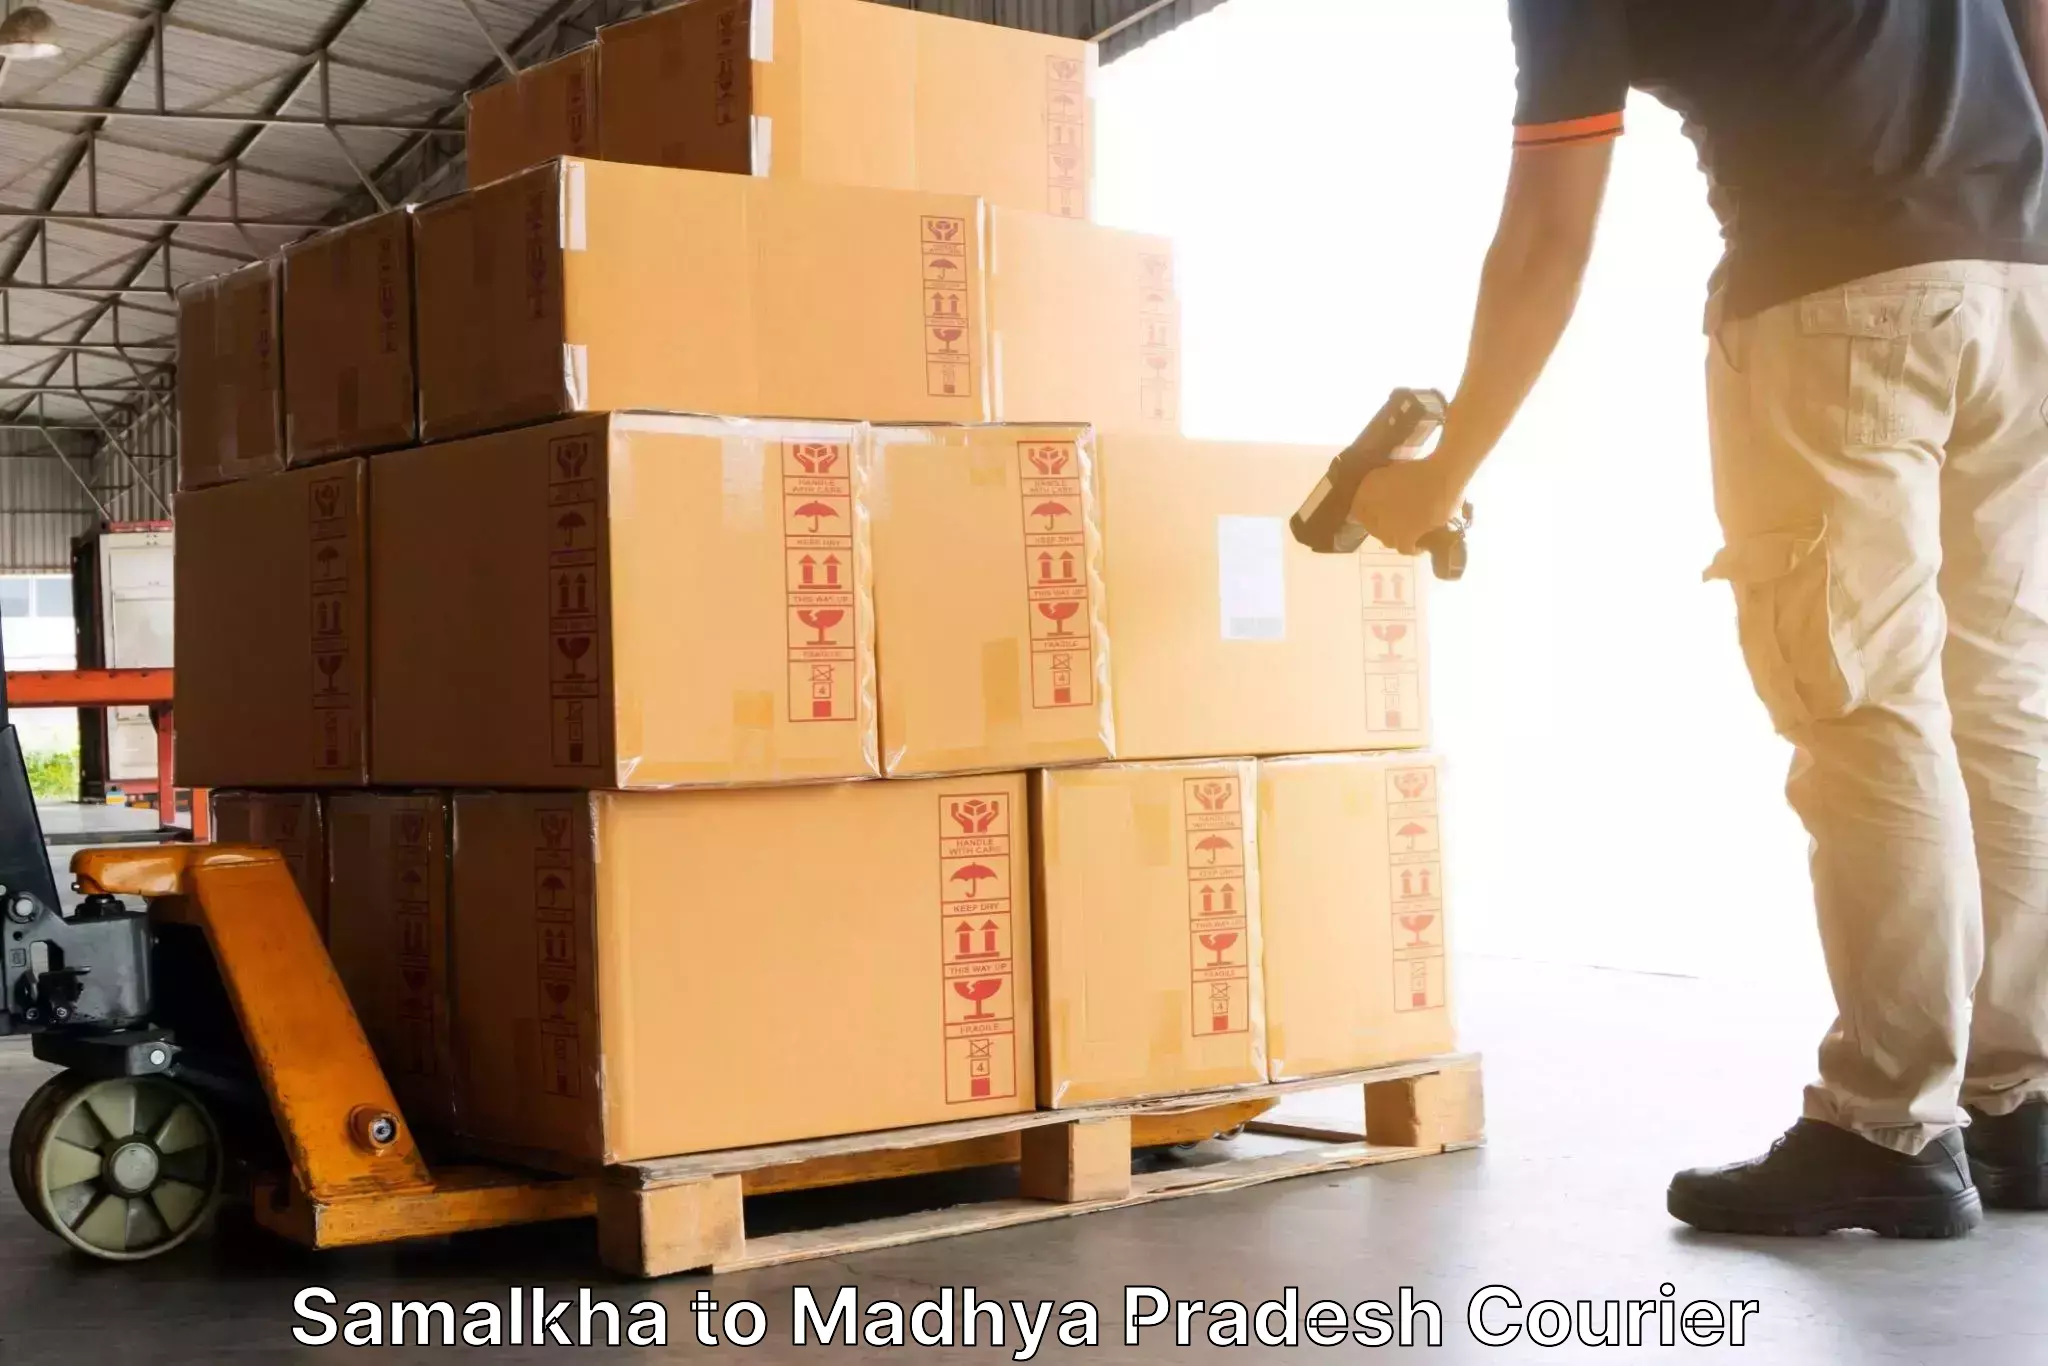 Courier service partnerships Samalkha to Madhya Pradesh